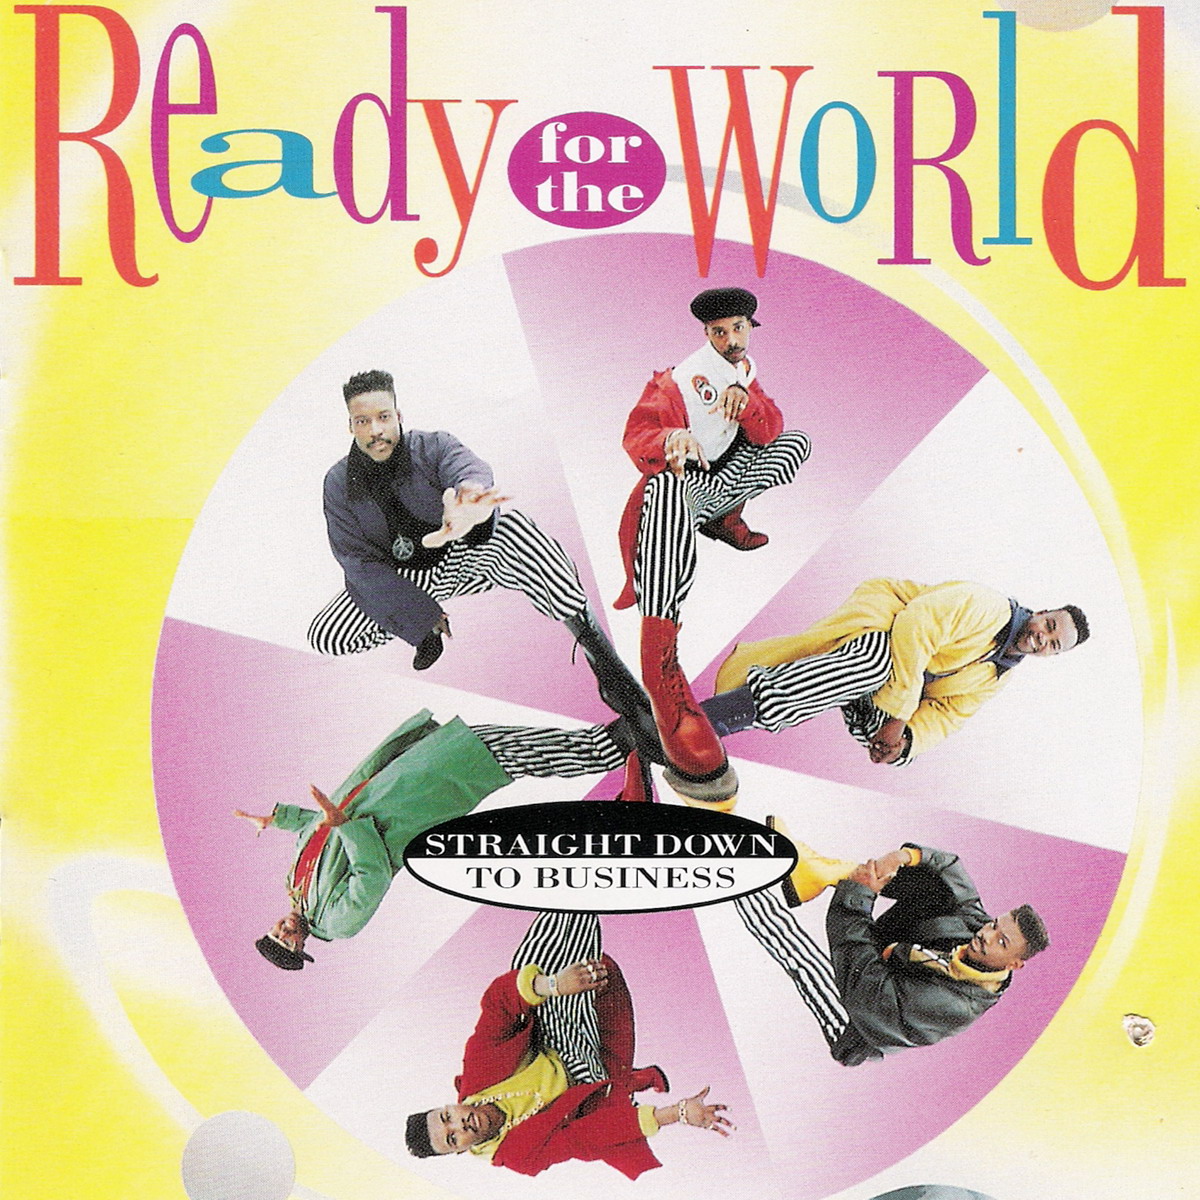 Ready for the World ready for the World. One World album 1990s. Straight down